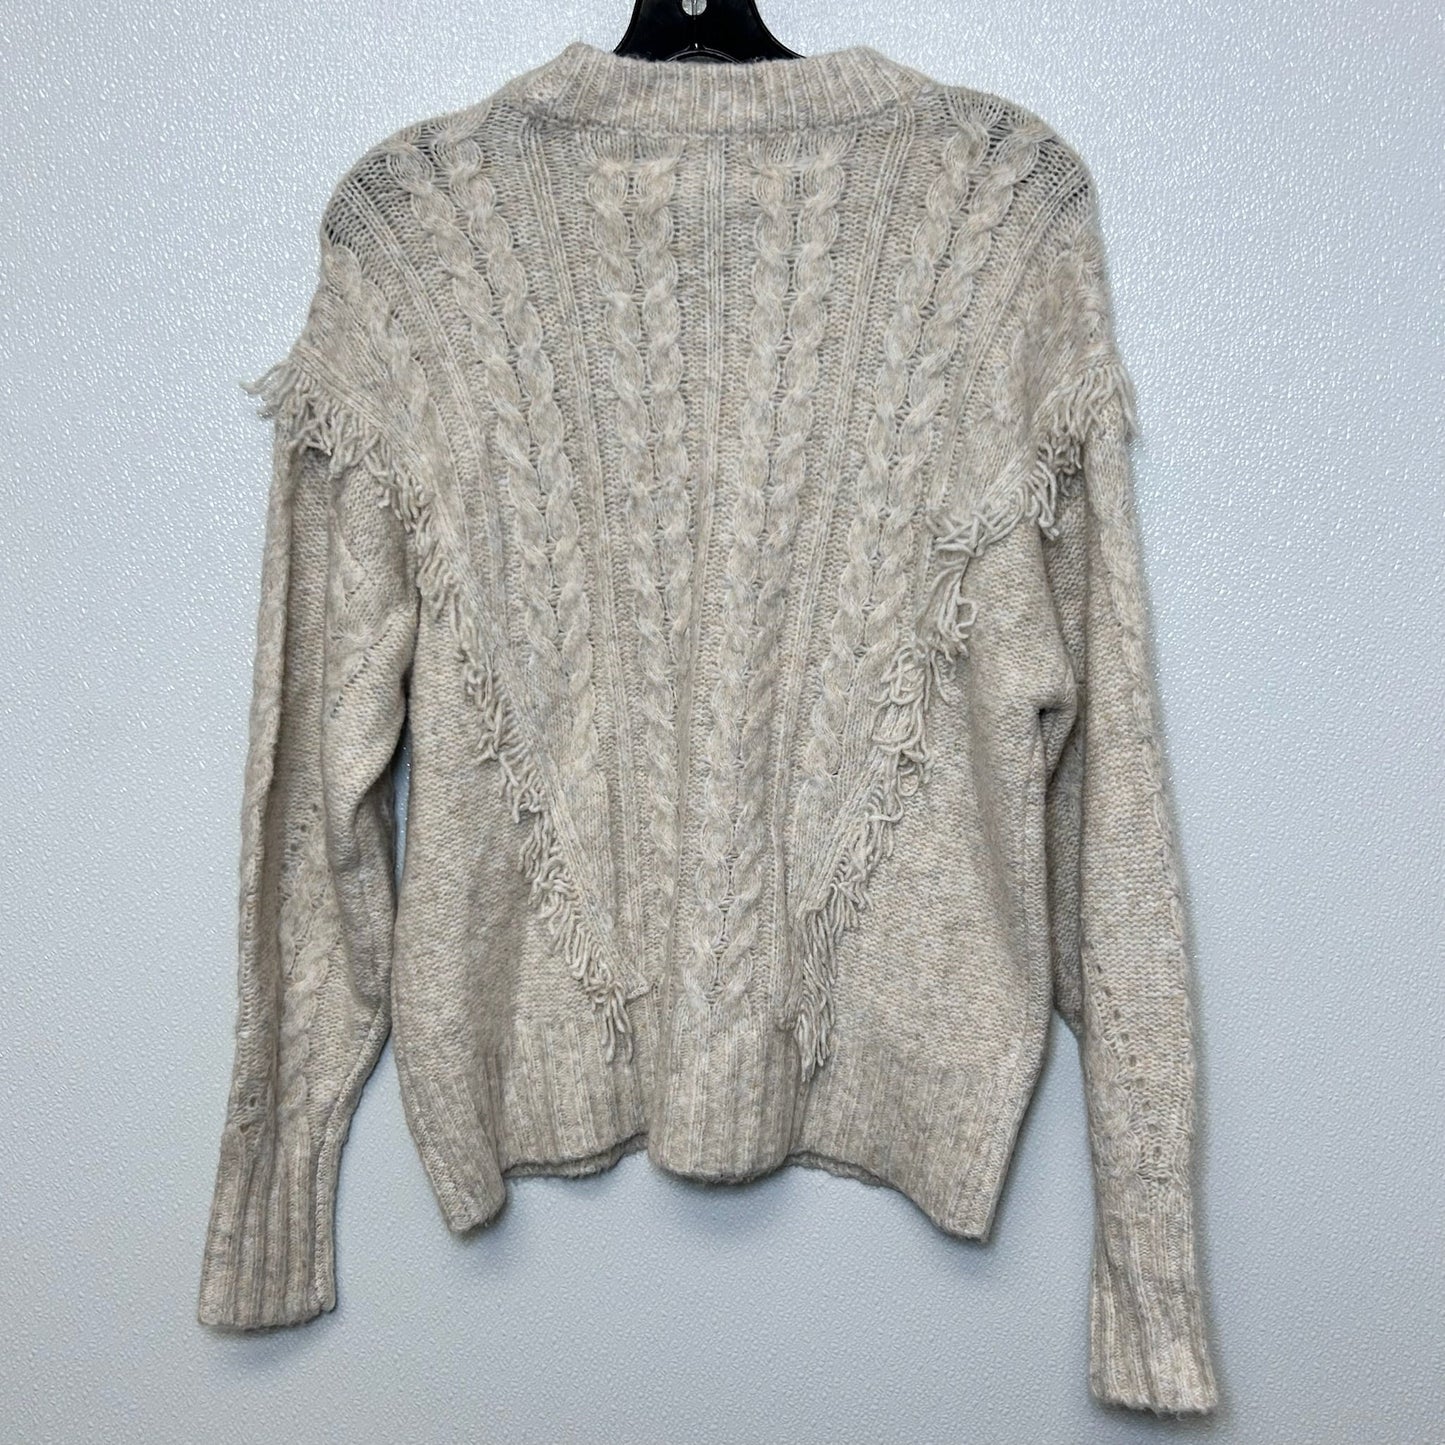 Beige Sweater Design History, Size S